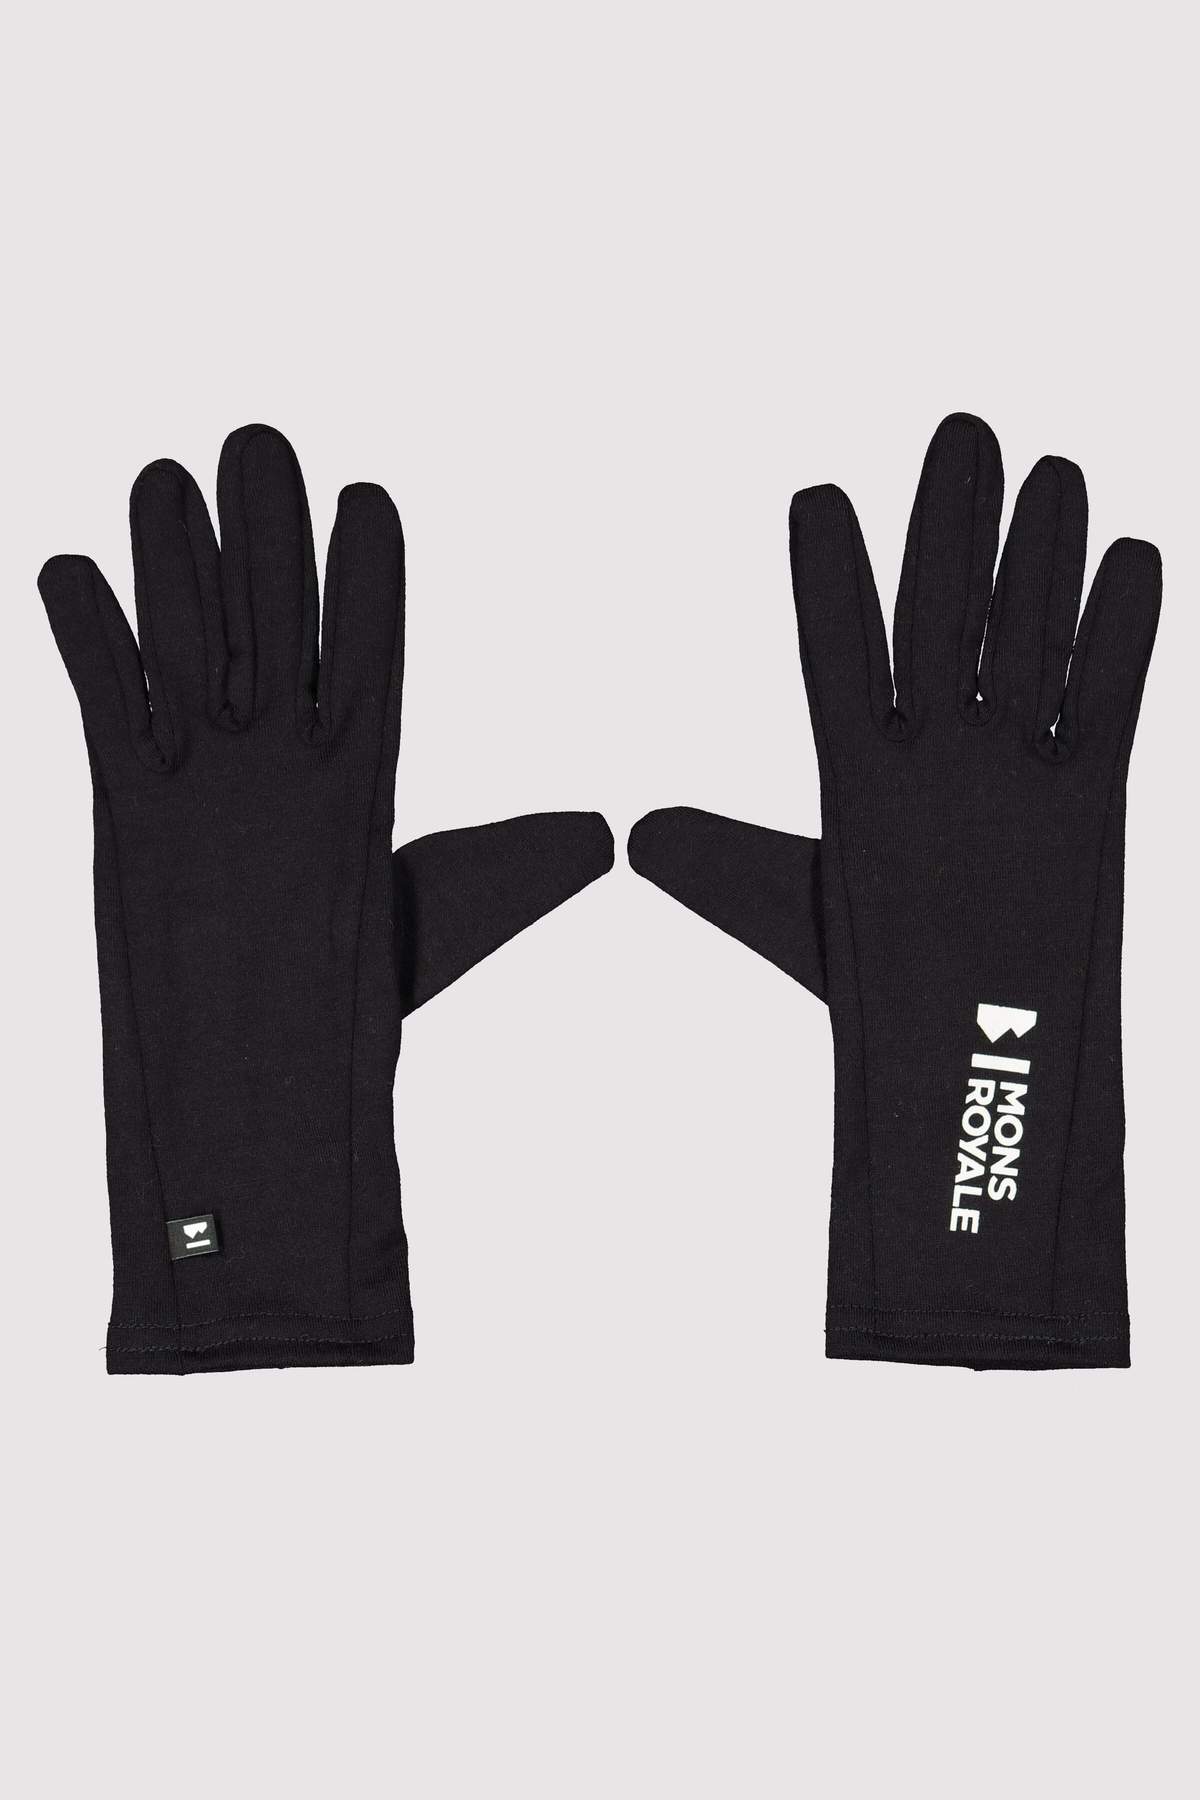 Mons Royale Volta Glove Liner, Black, Unisex